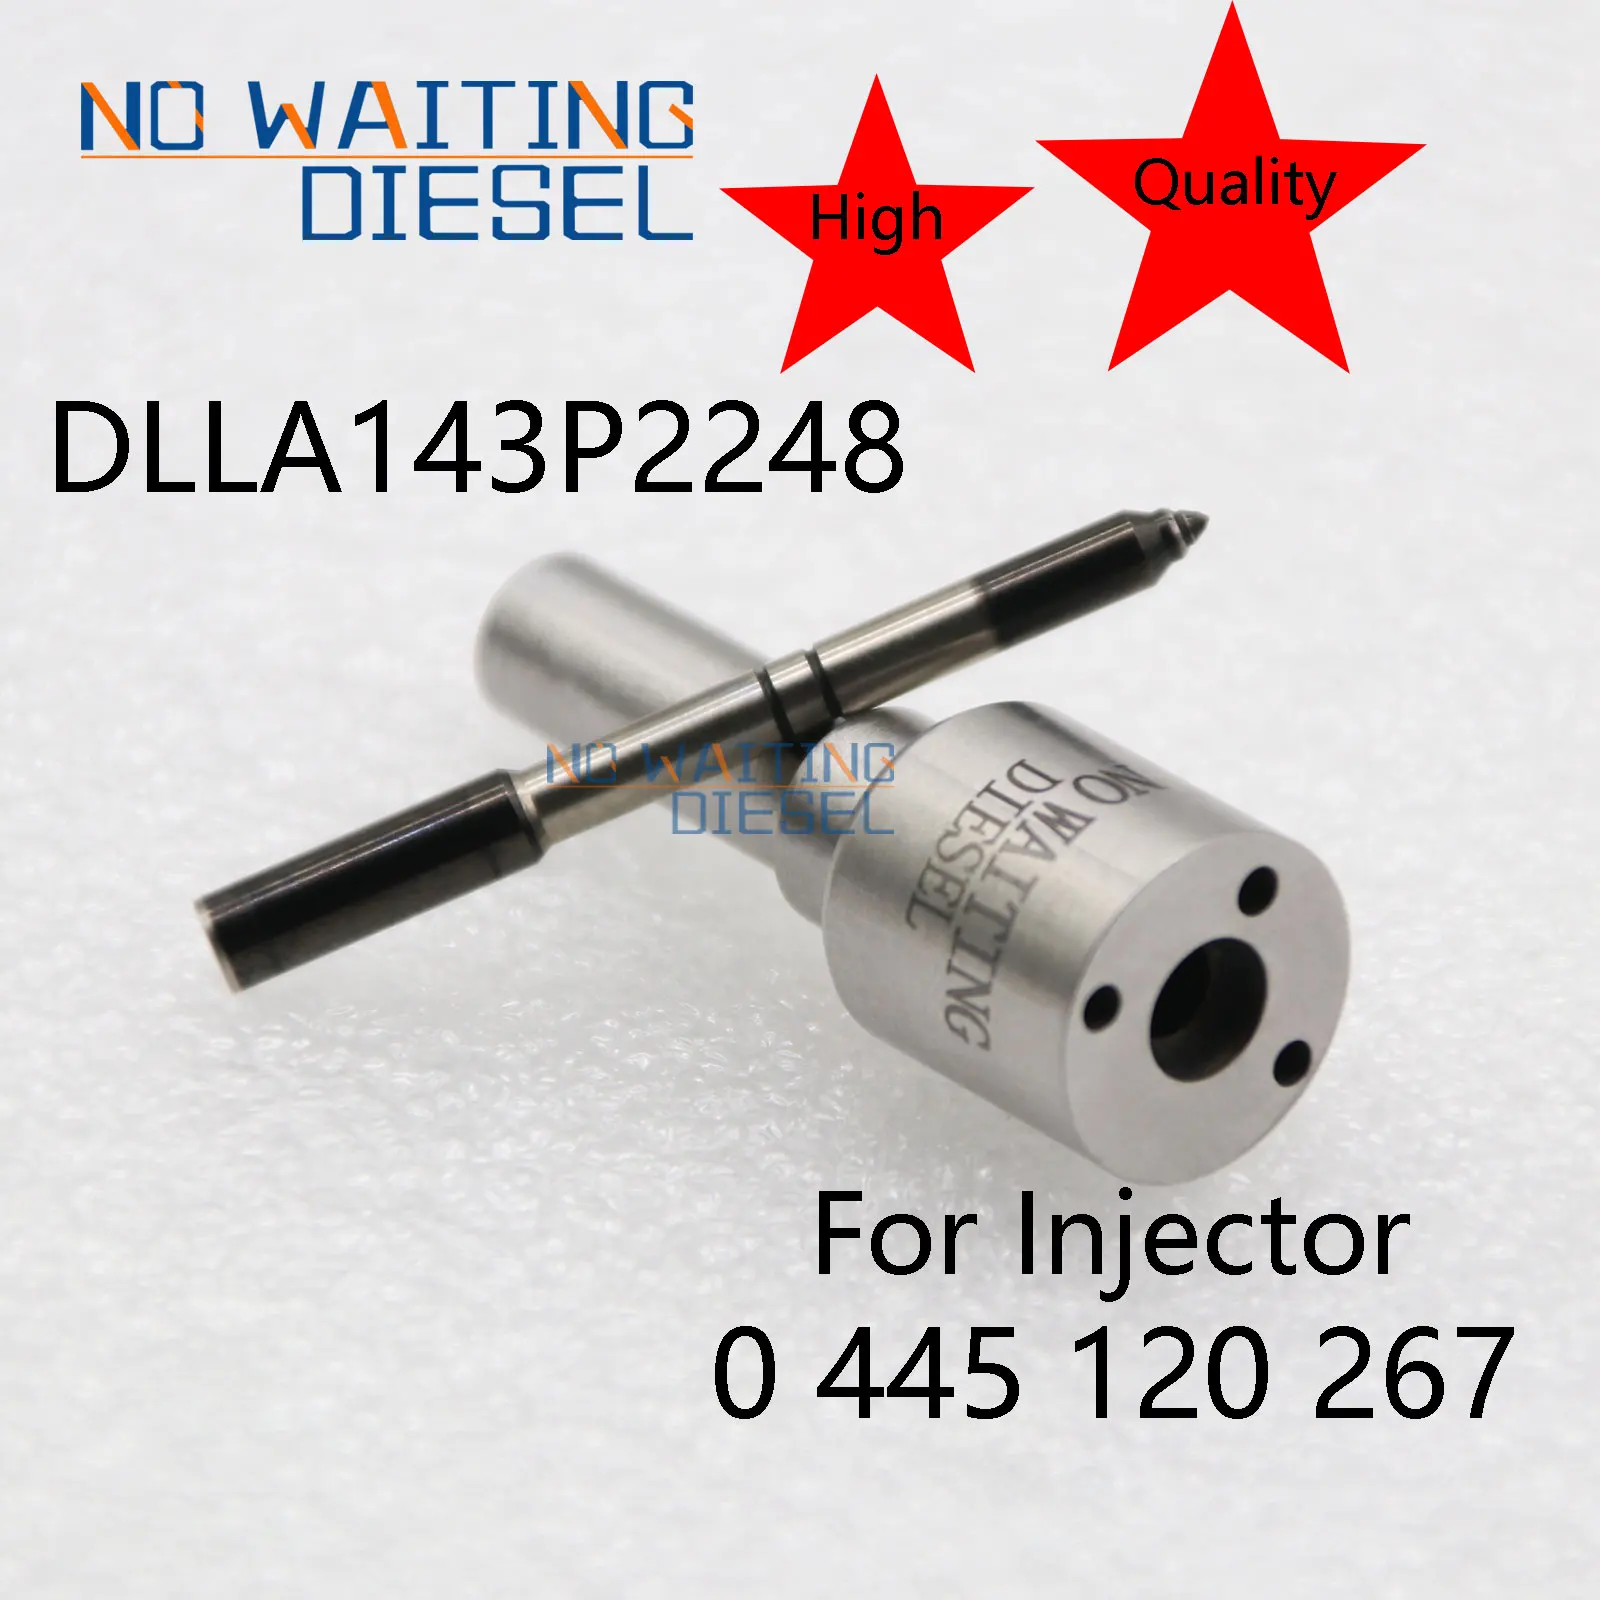 

DLLA143P2248 Fuel Pump Nozzle DLLA 143P 2248 Injector Nozzle DLLA 143P2248 (0 433 172 248) DLLA 143 P 2248 Fits for 0445120267